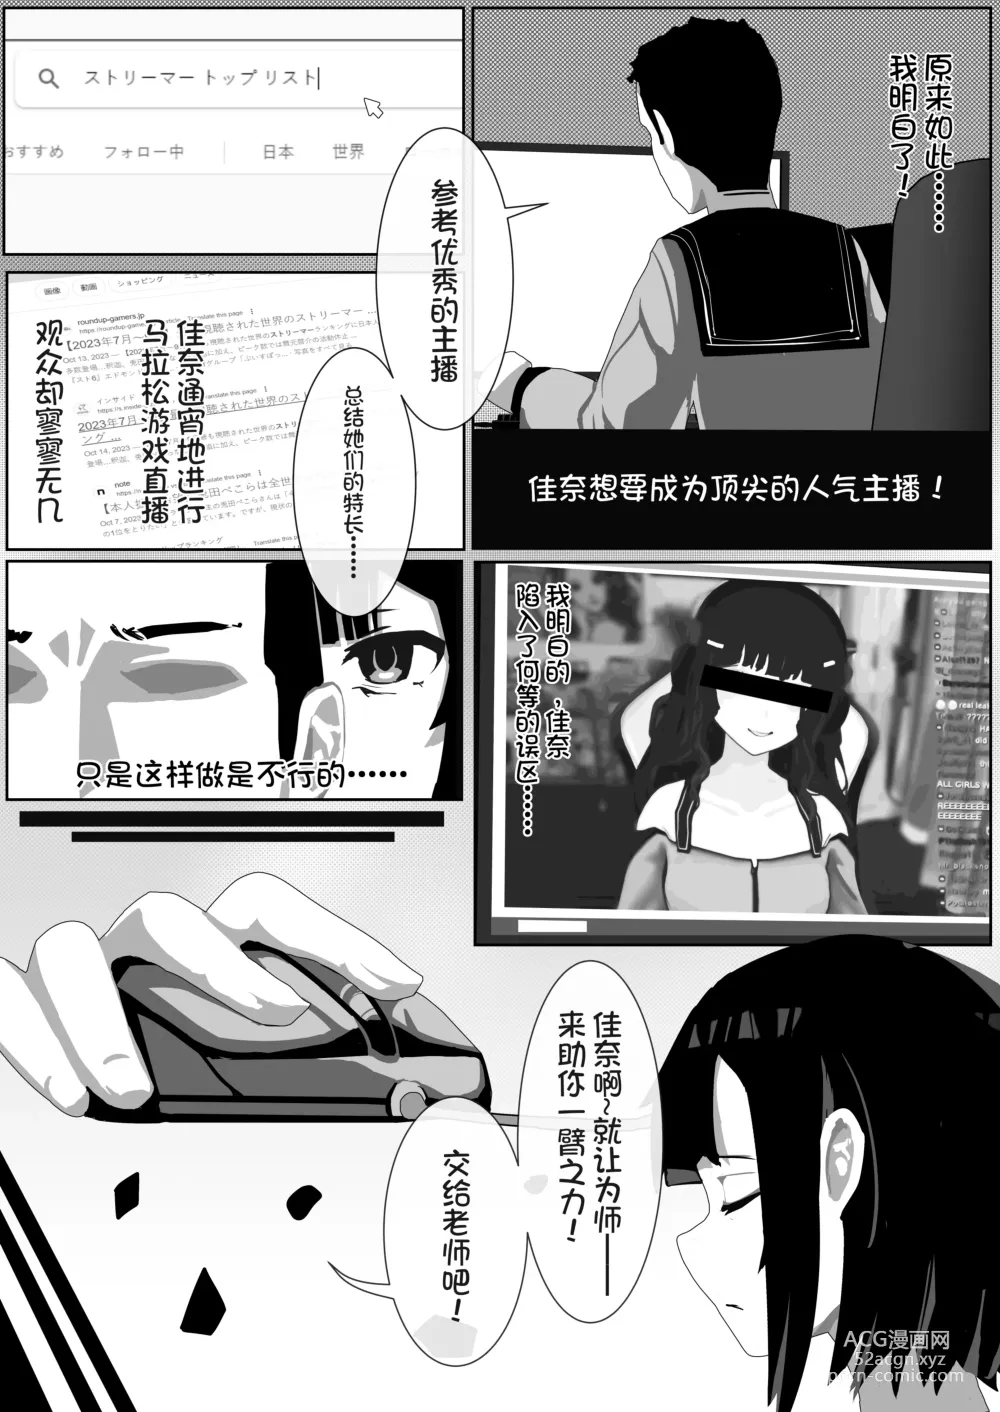 Page 4 of manga 皮物問題學生 #1 渡邊佳奈、2